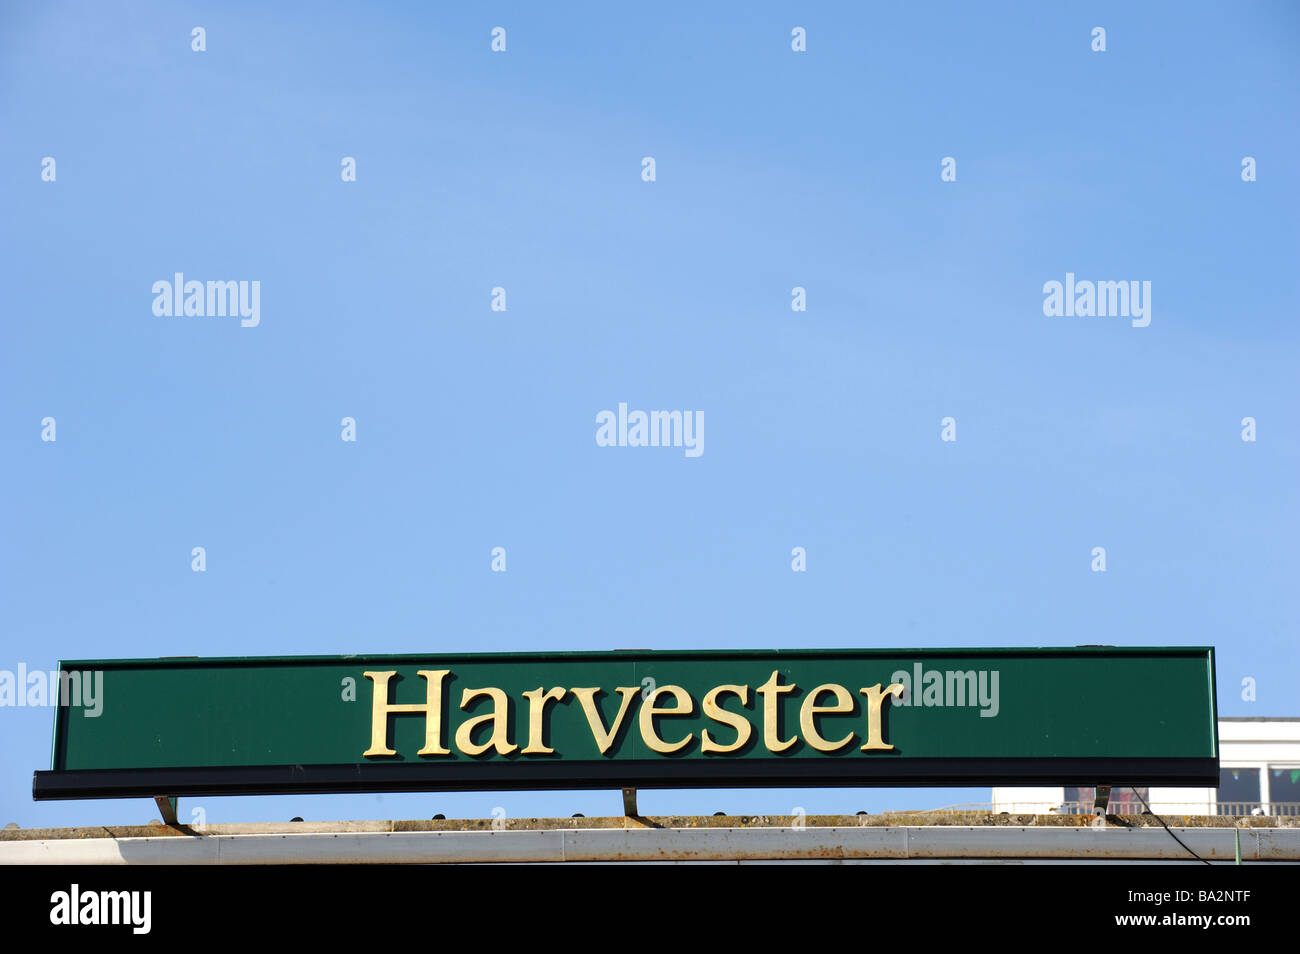 Harvester pub sign against a blue sky Stock Photo